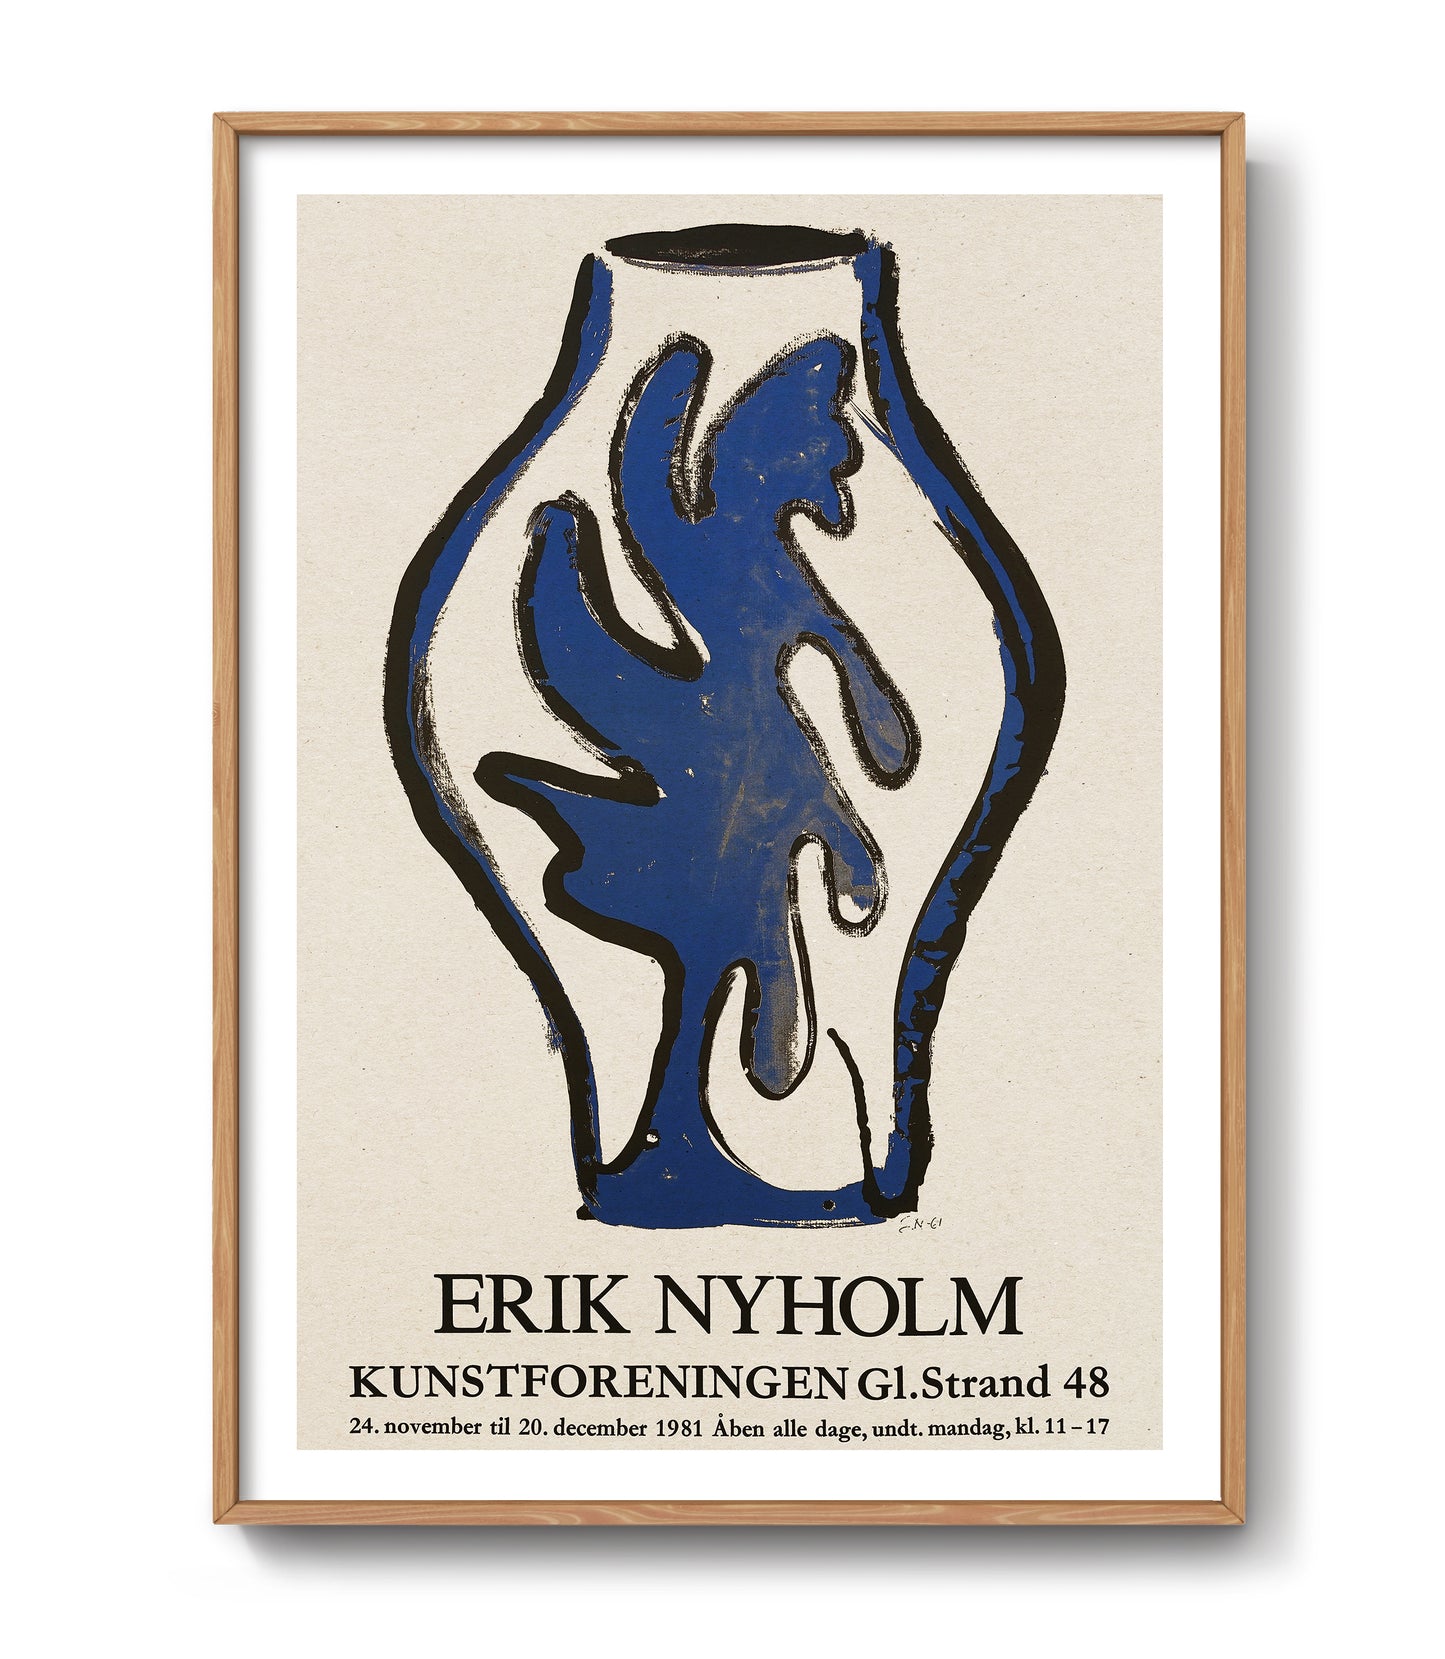 Erik Nyholm exhibition poster